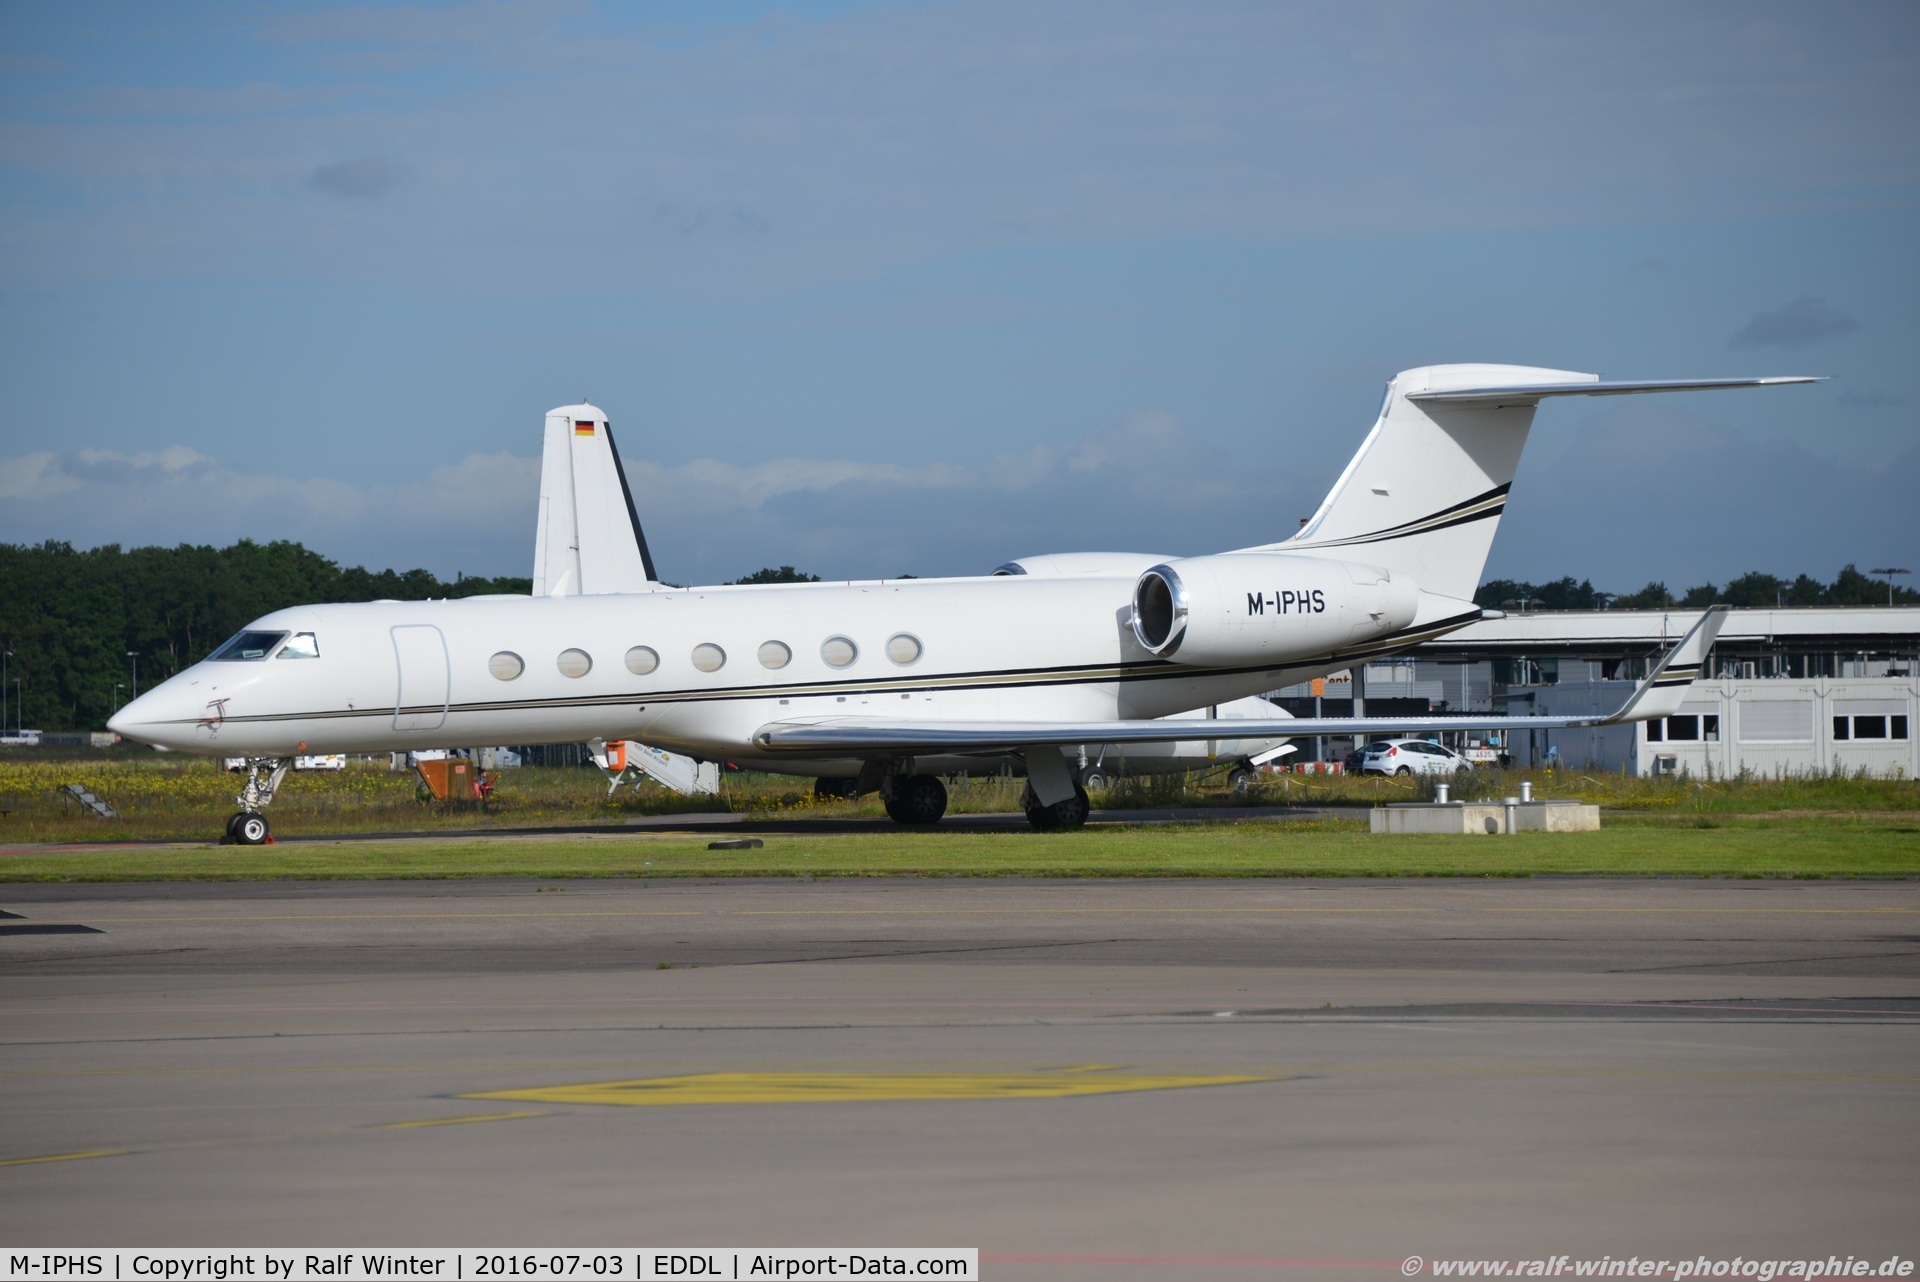 M-IPHS, 2009 Gulfstream Aerospace GV-SP (G550) C/N 5246, Gulfstream Aerospace GV-SP G550 - Islands Aviation Ltd - 5246 - M-IPHS - 03.07.2016 - DUS